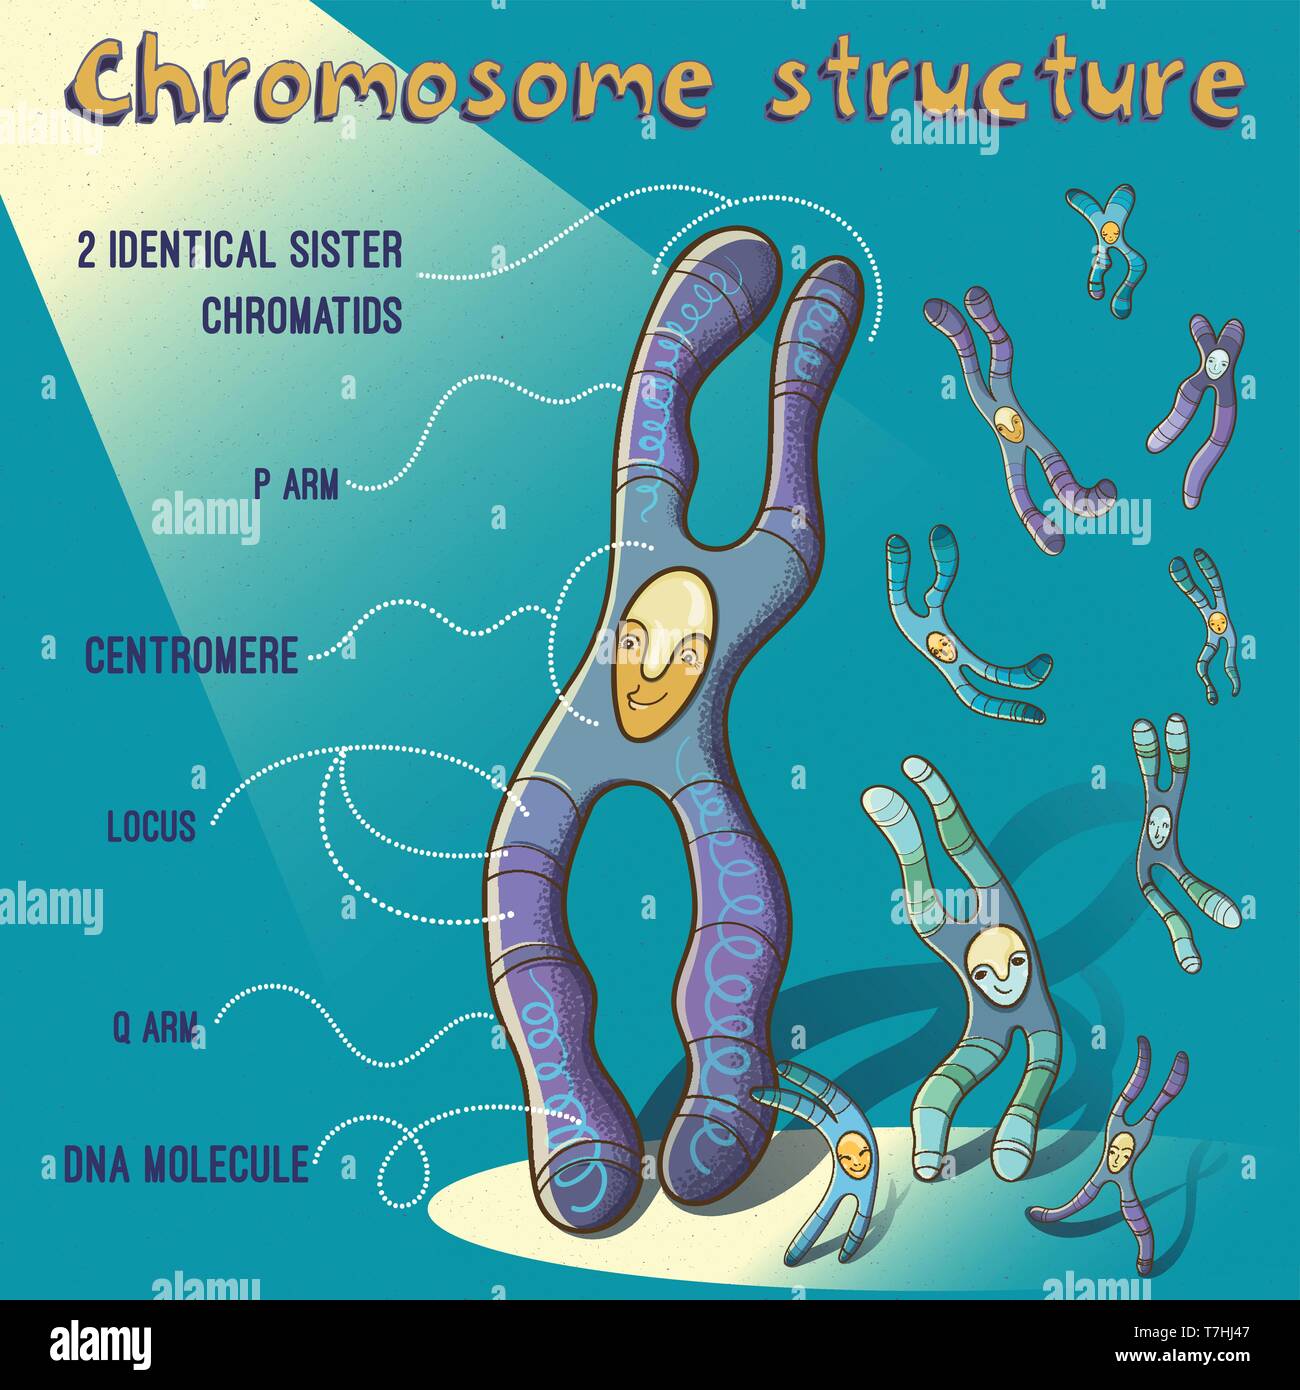 Medical Blue Chromosome Poster Background Wallpaper Image For Free Download   Pngtree  Science background Cool pictures of nature Medical background